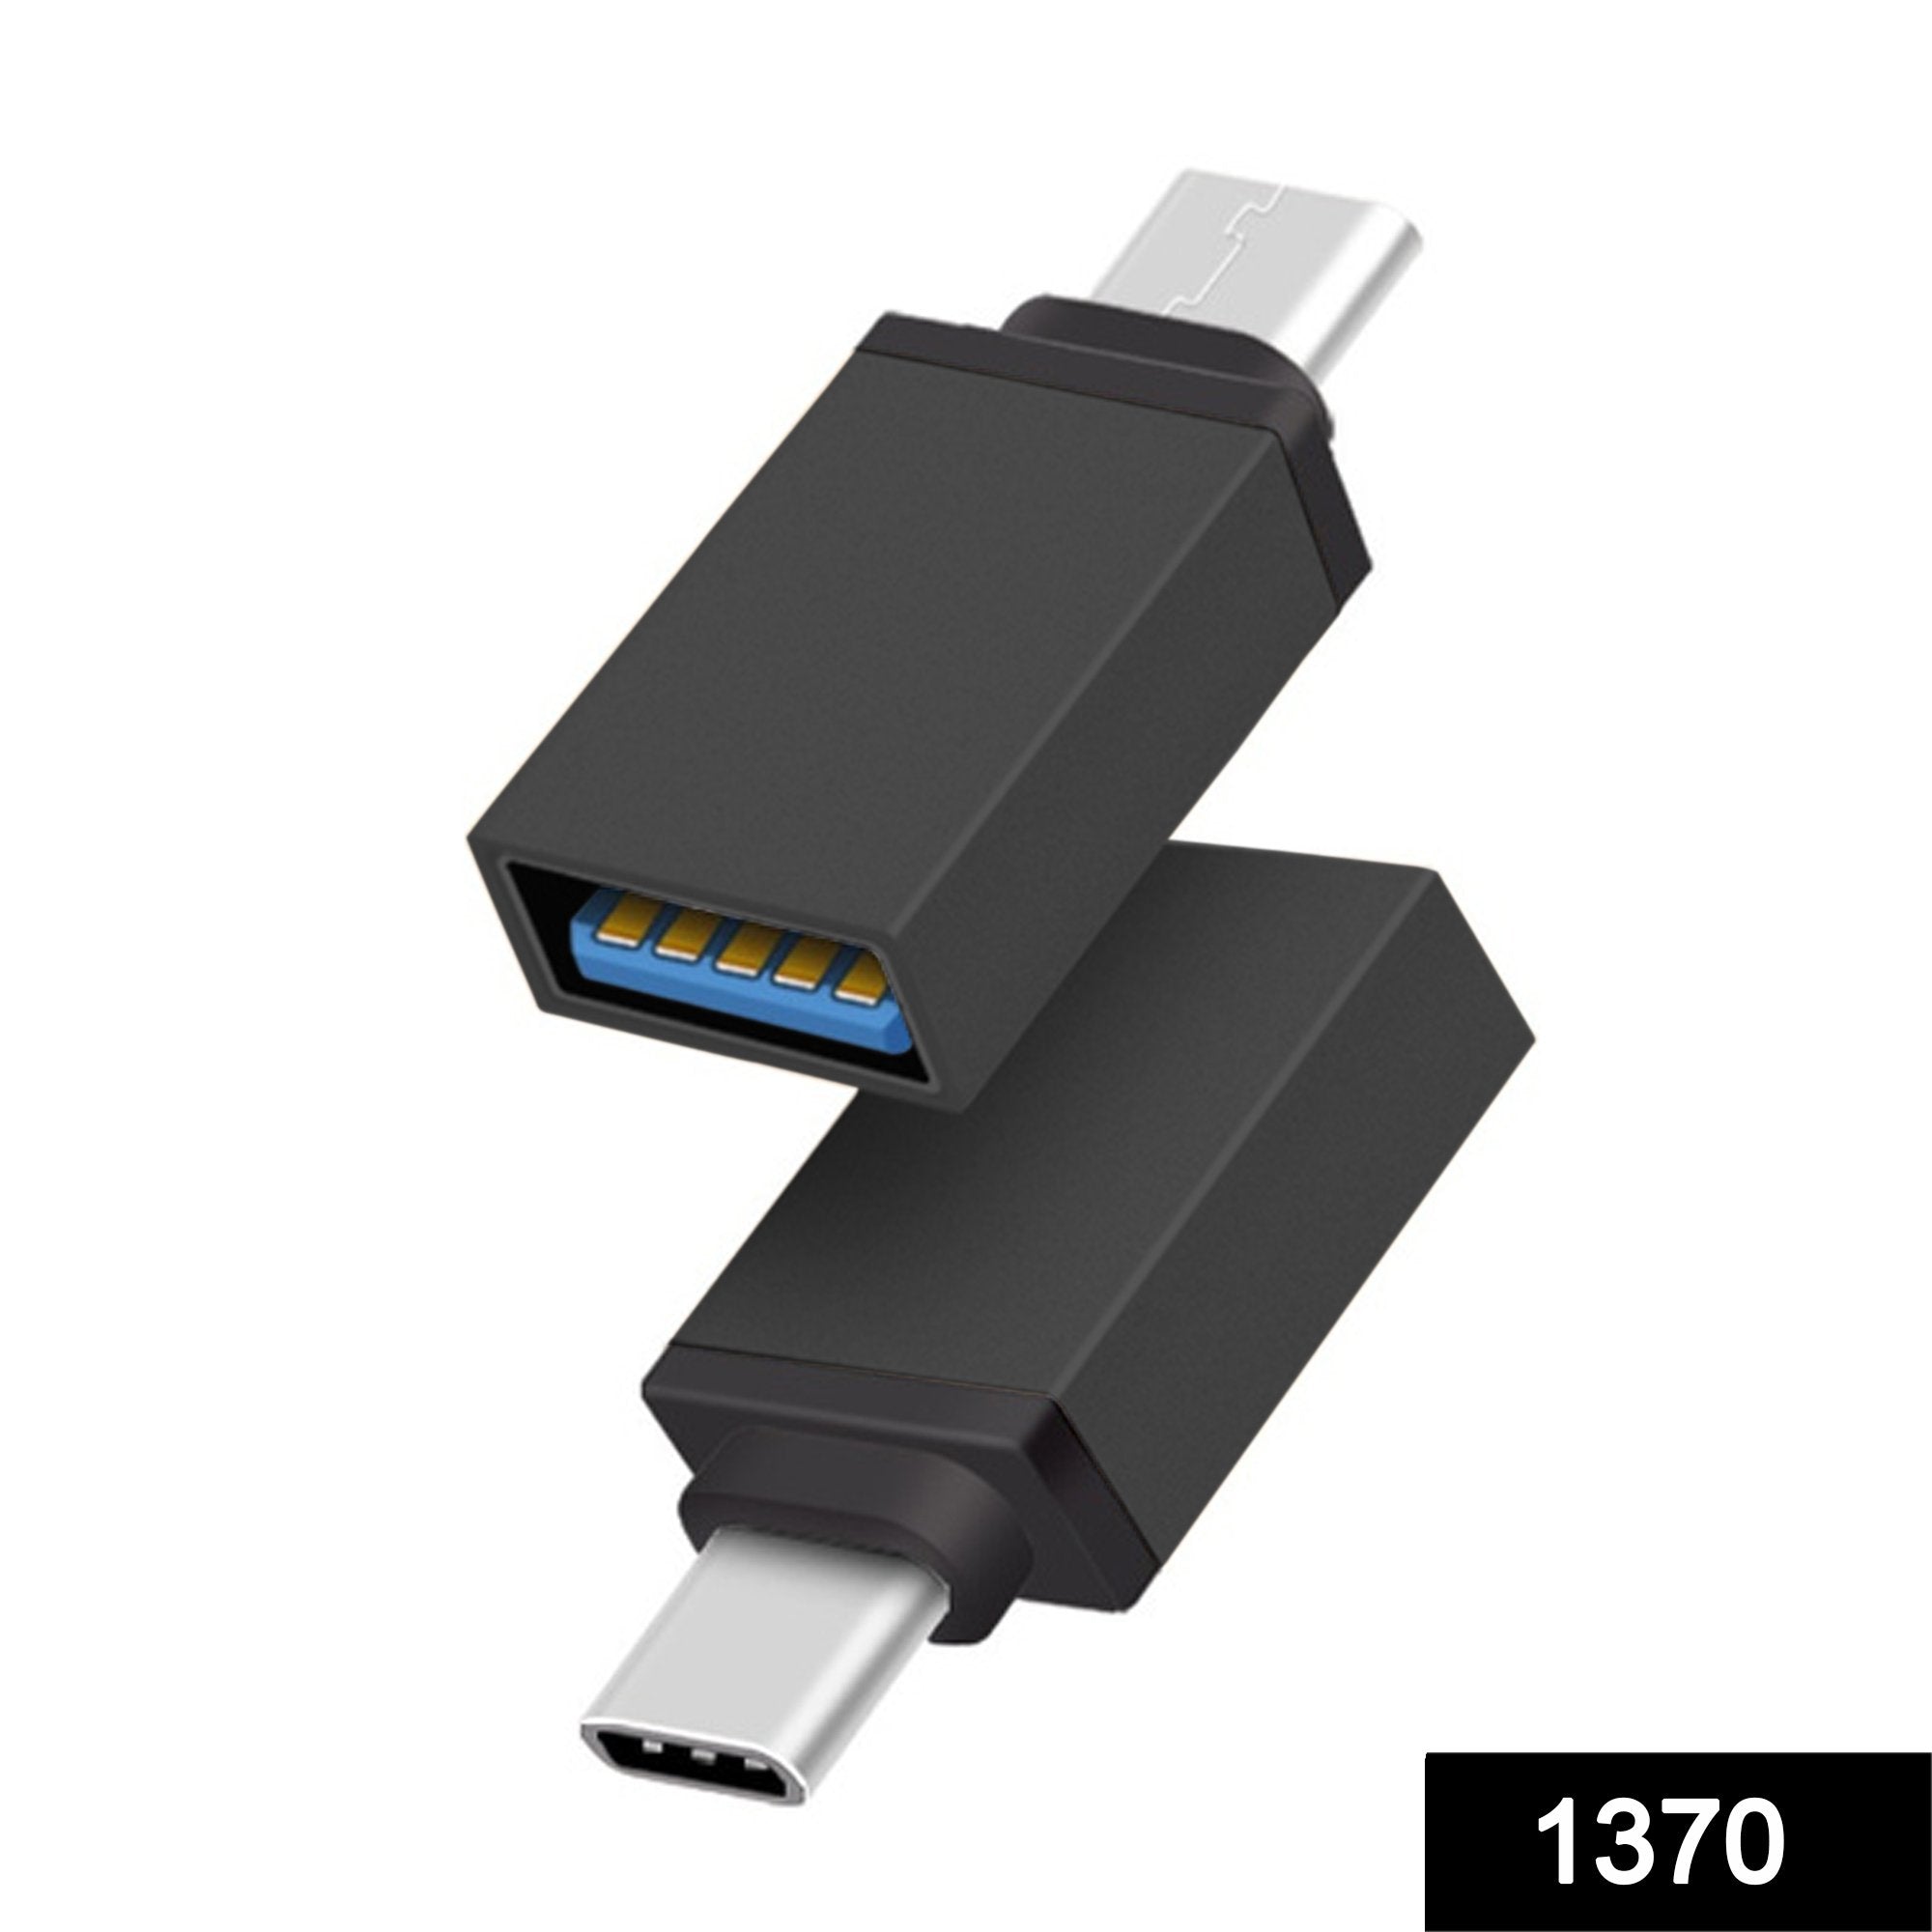 6293 USB LED LAMP Night Light, Plug in Small Led Nightlight Mini Portable  for PC and Laptop.